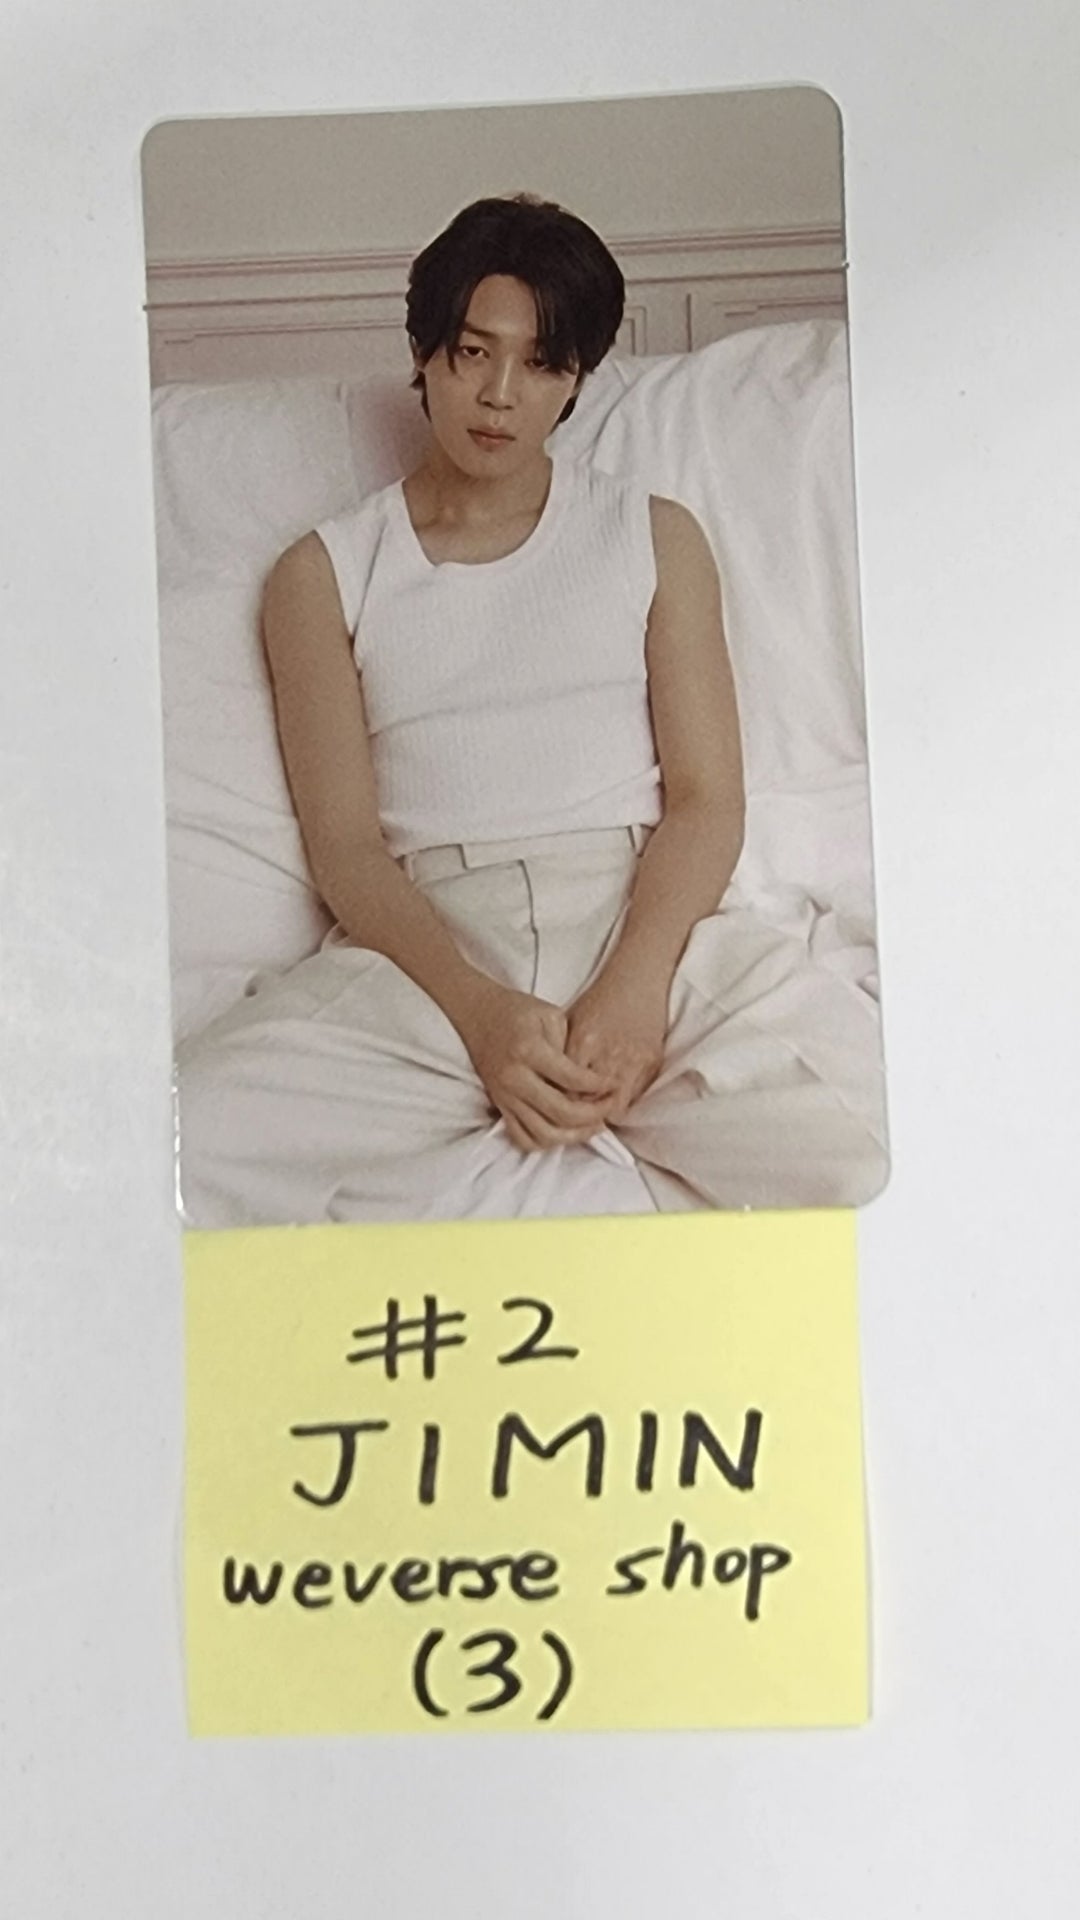 Jimin (Of BTS) "FACE" - Weverse Shop 予約特典フォトカード